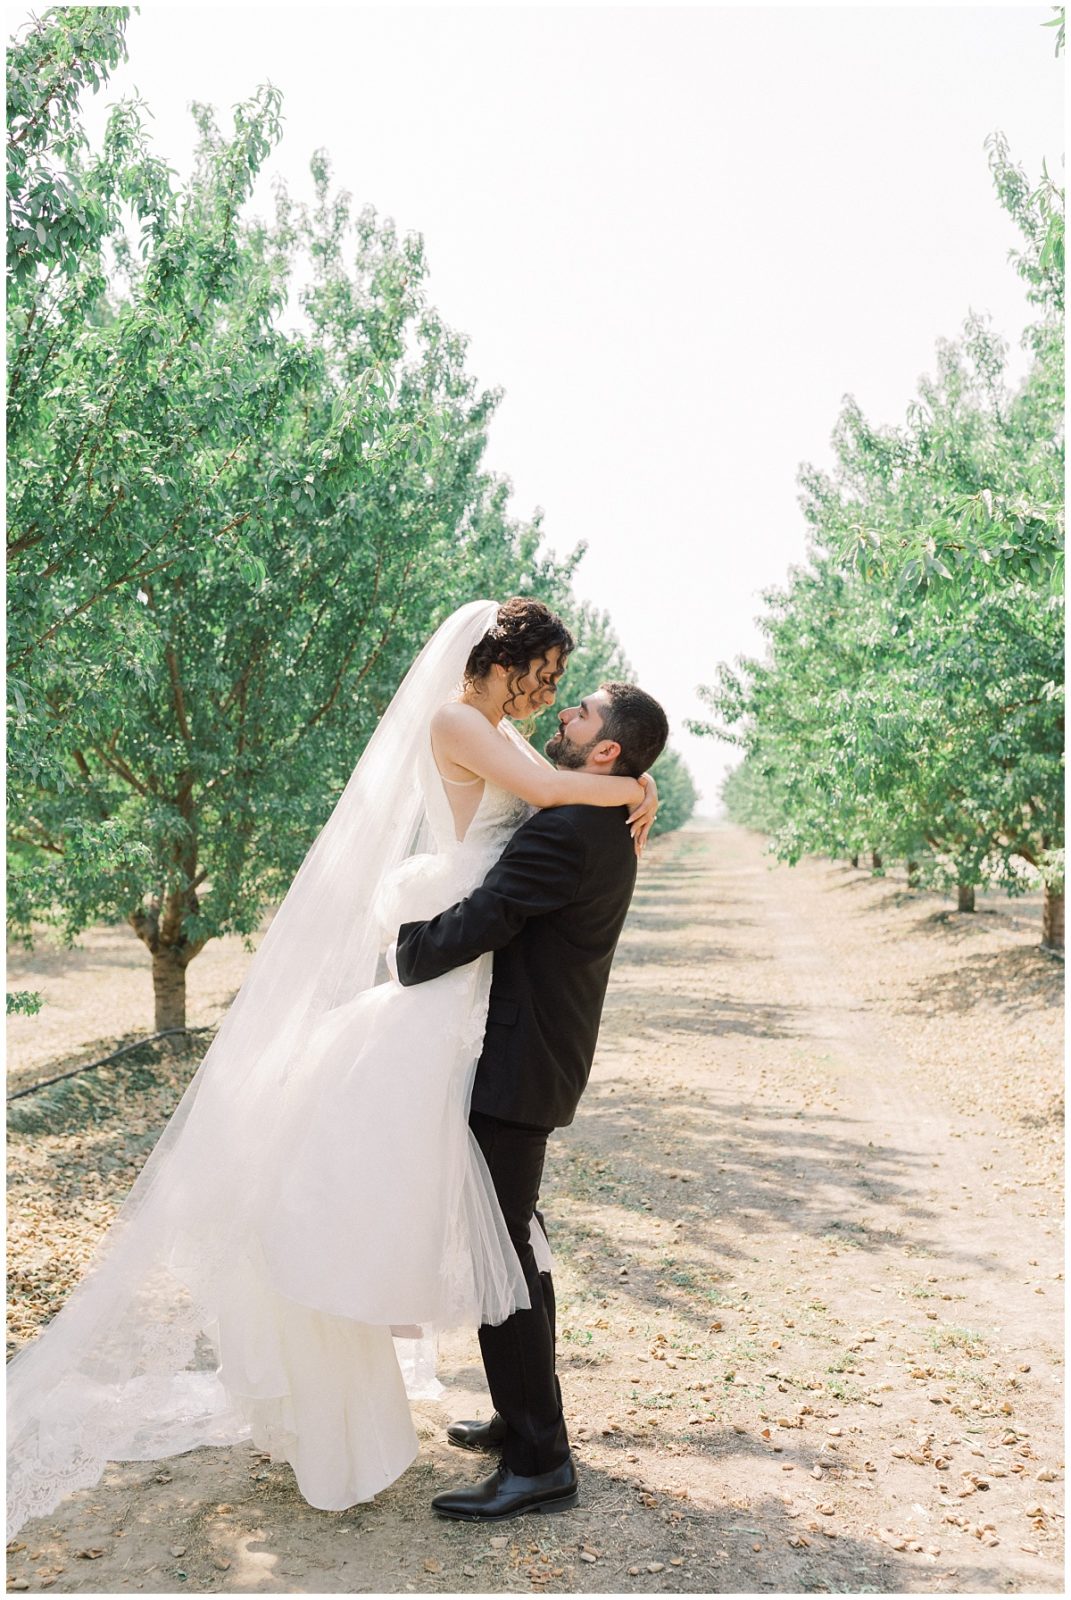 Rustic Fall Wedding in Orchard Field